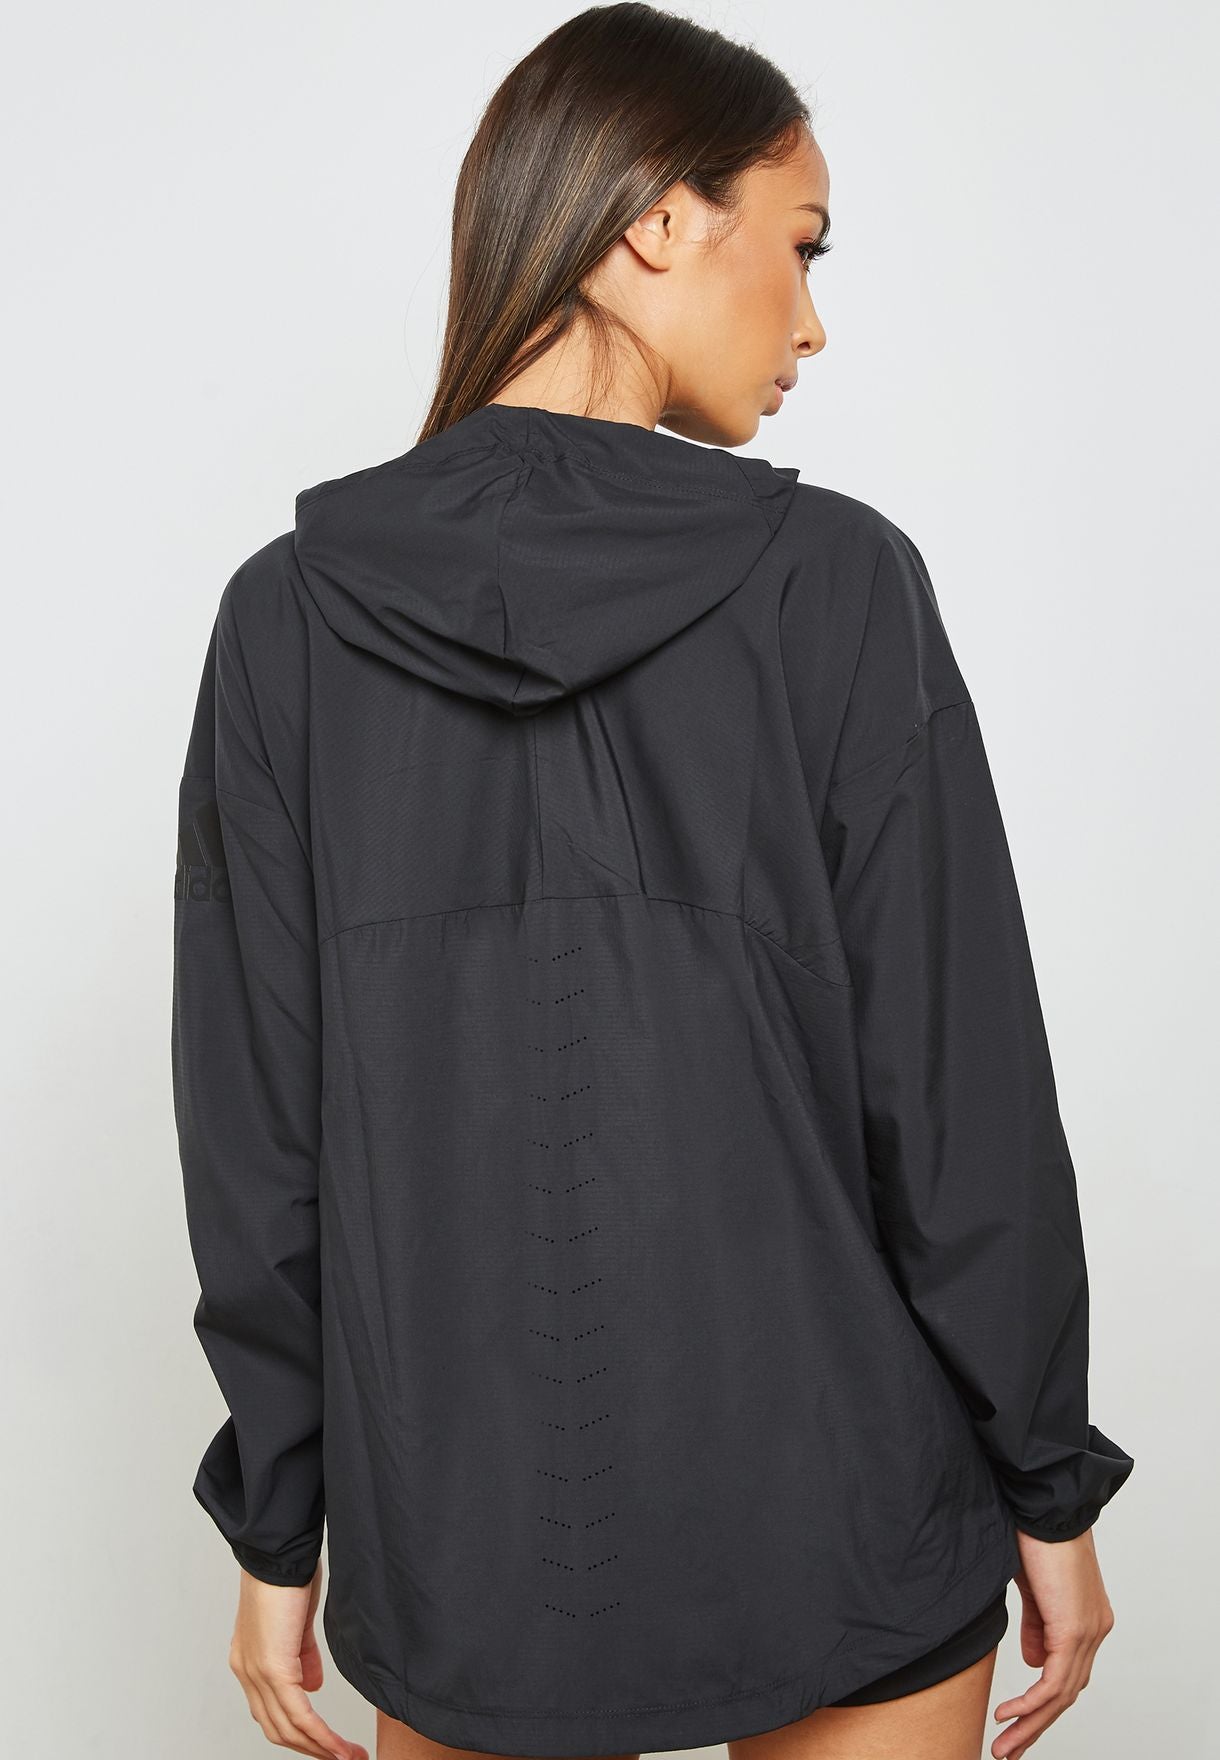 AA-L2 (Adidas woven cover up jacket black) 81896140 ADIDAS